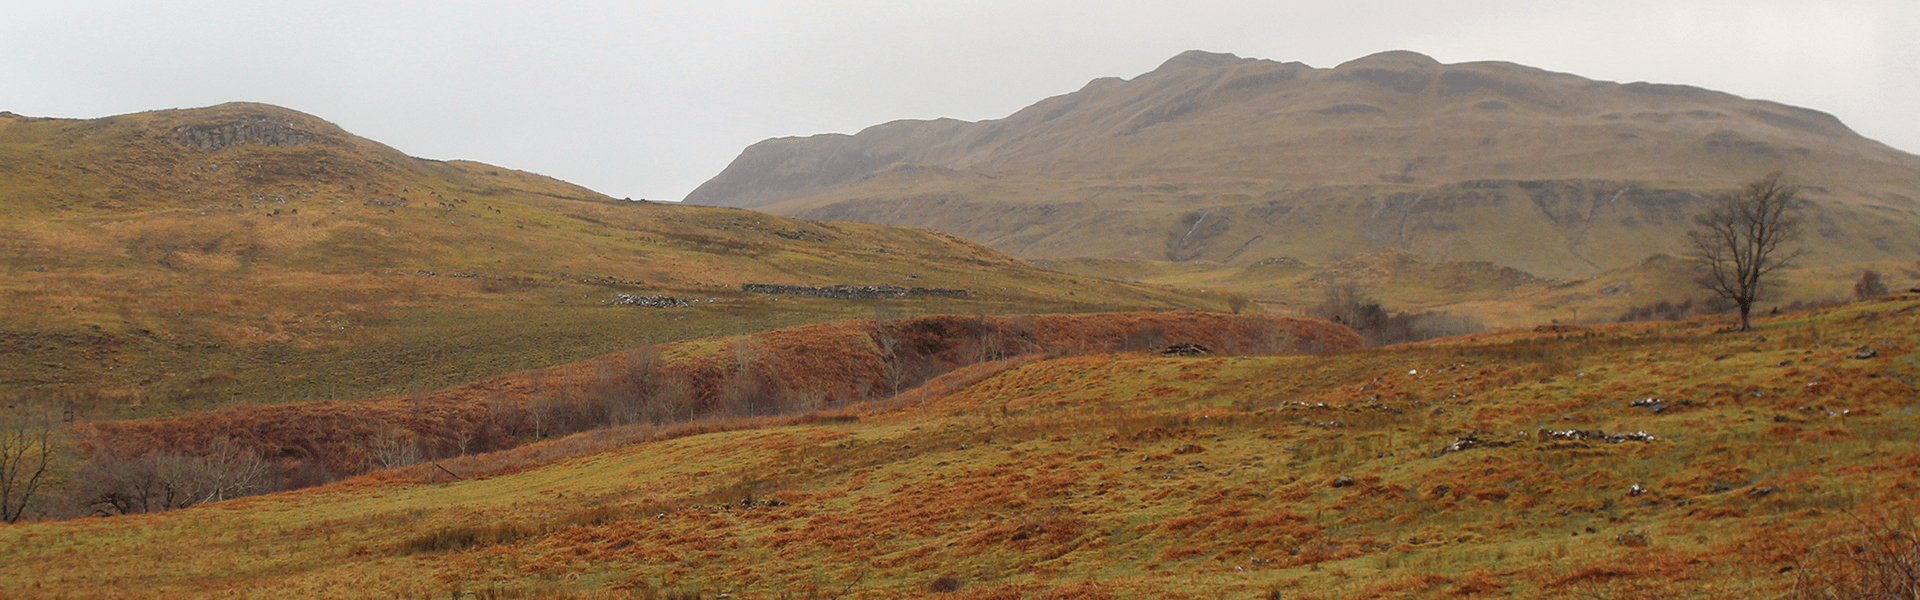 Ardnamurchan landscape image